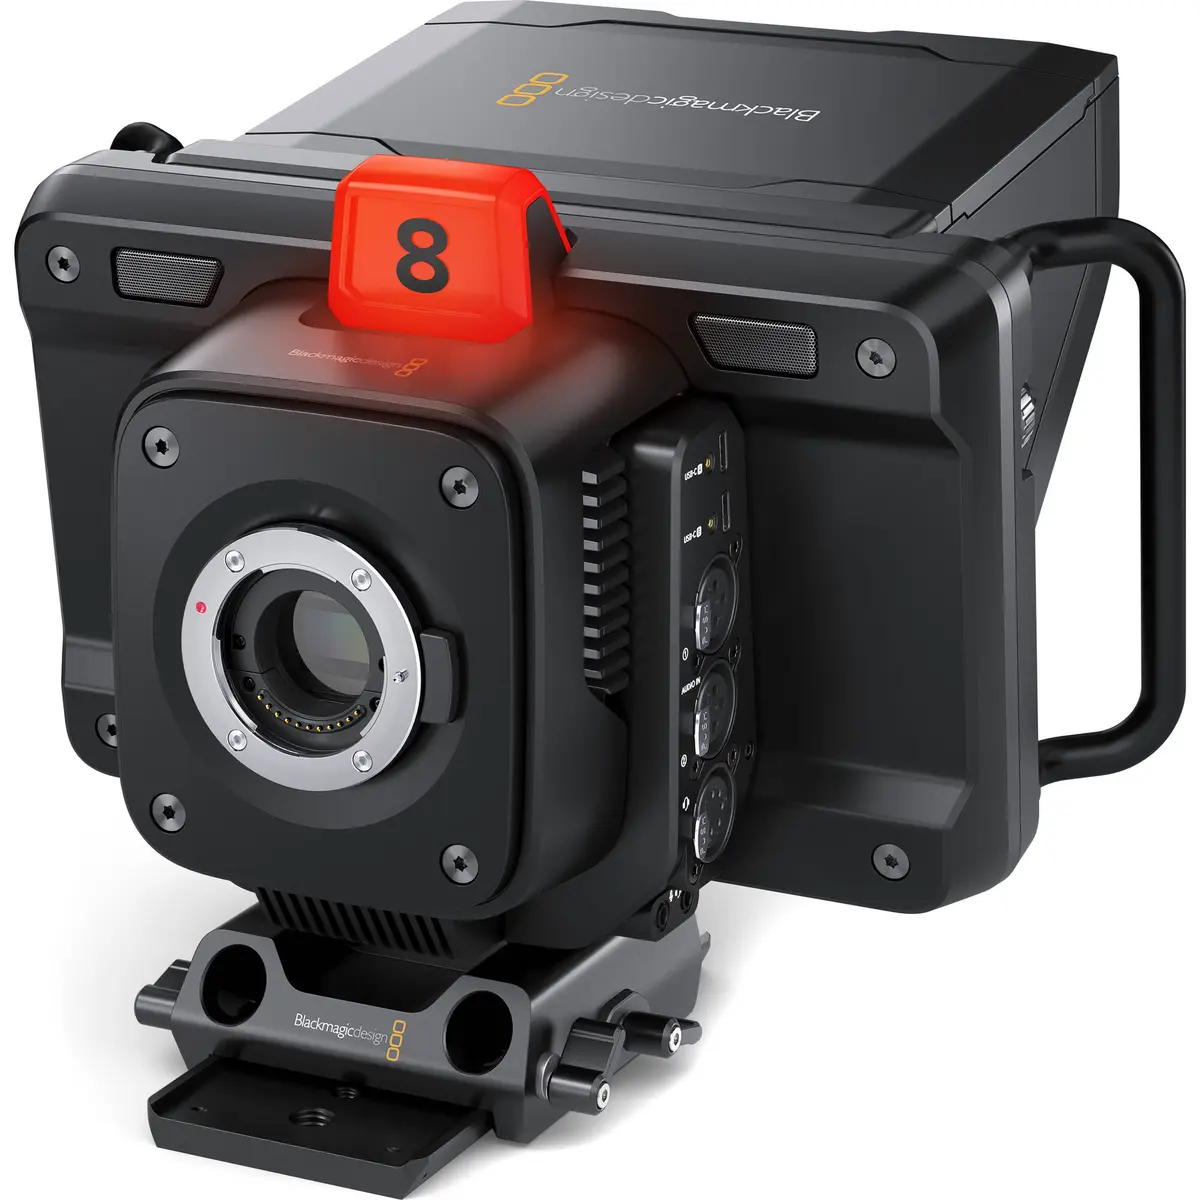 2. Blackmagic Design Studio Camera 4K Pro G2